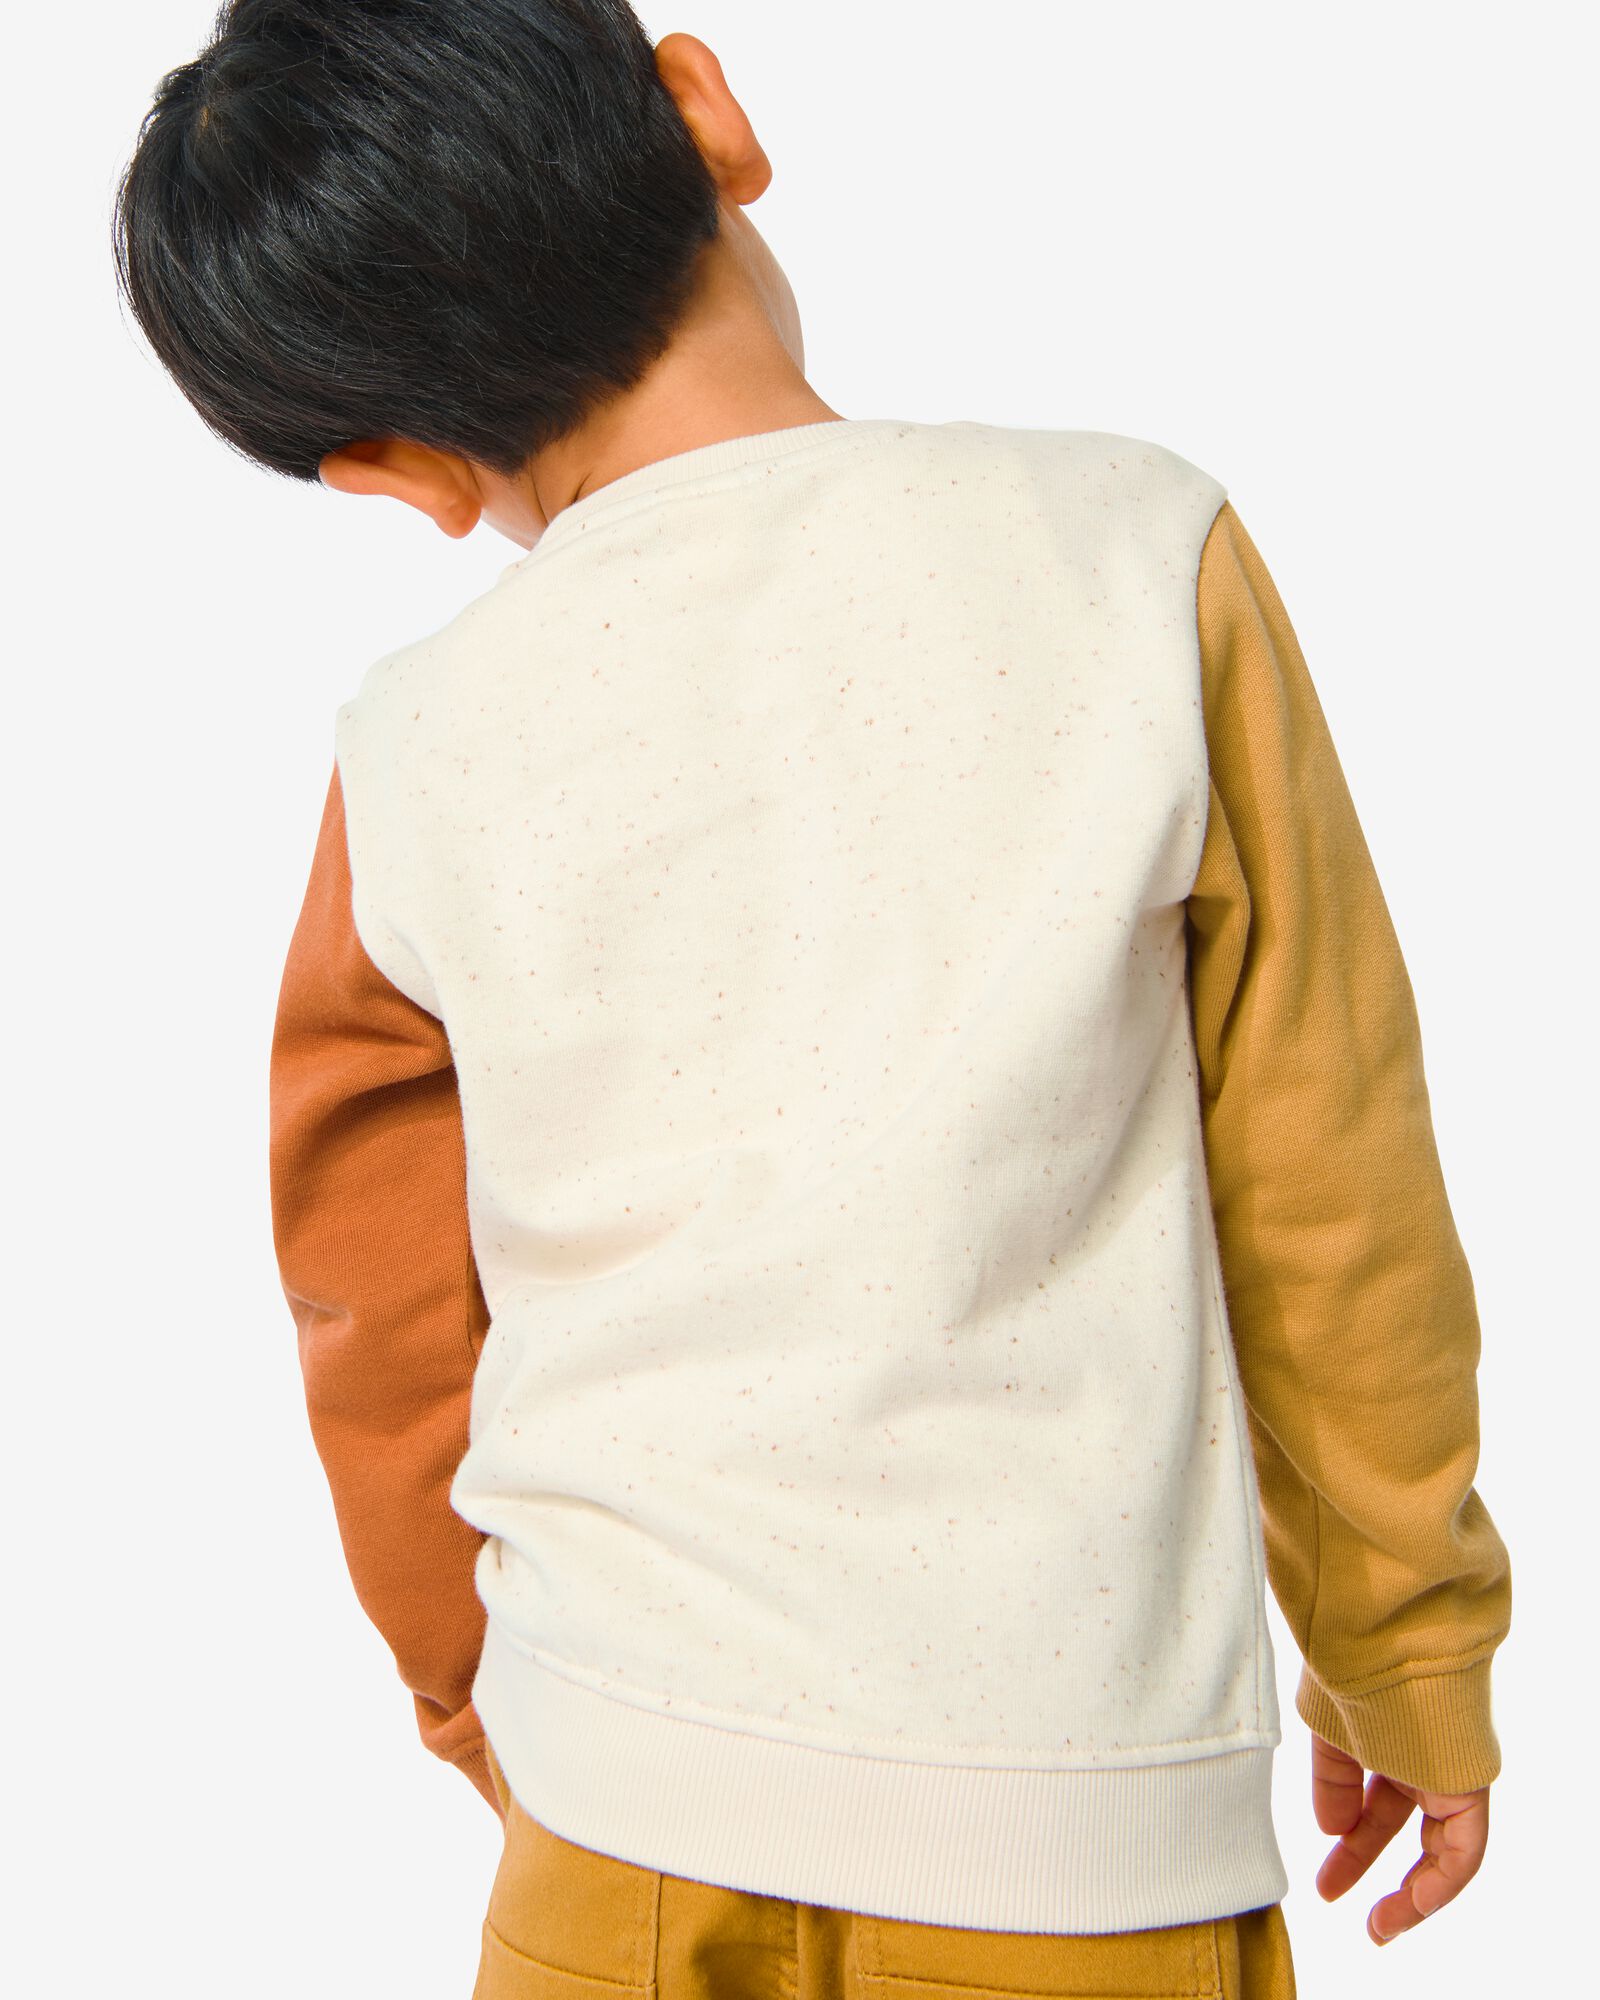 kinder sweater bruin bruin - 1000032476 - HEMA